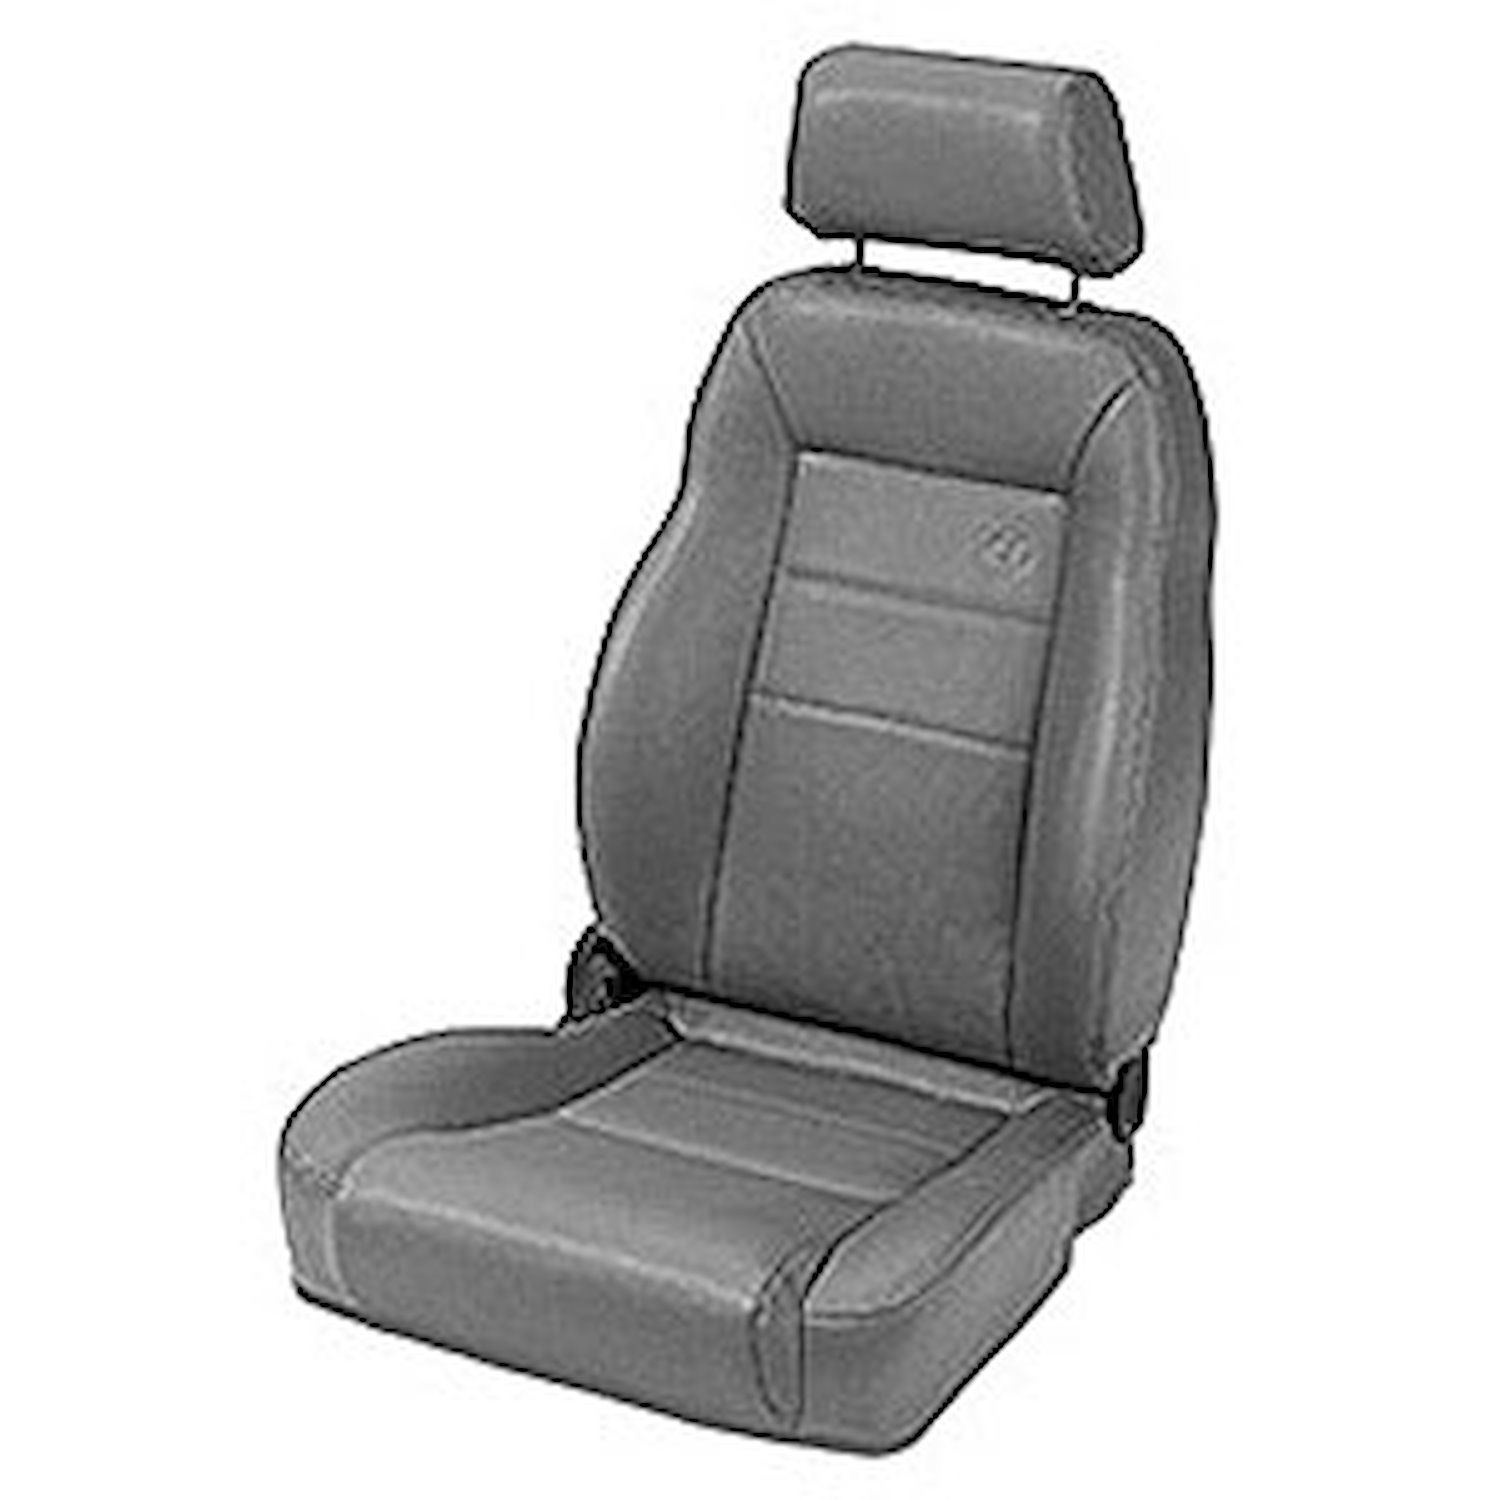 Trailmax II Pro Seat, Charcoal, Front, High-Back, Vinyl, Premium Bucket, Passenger Side,